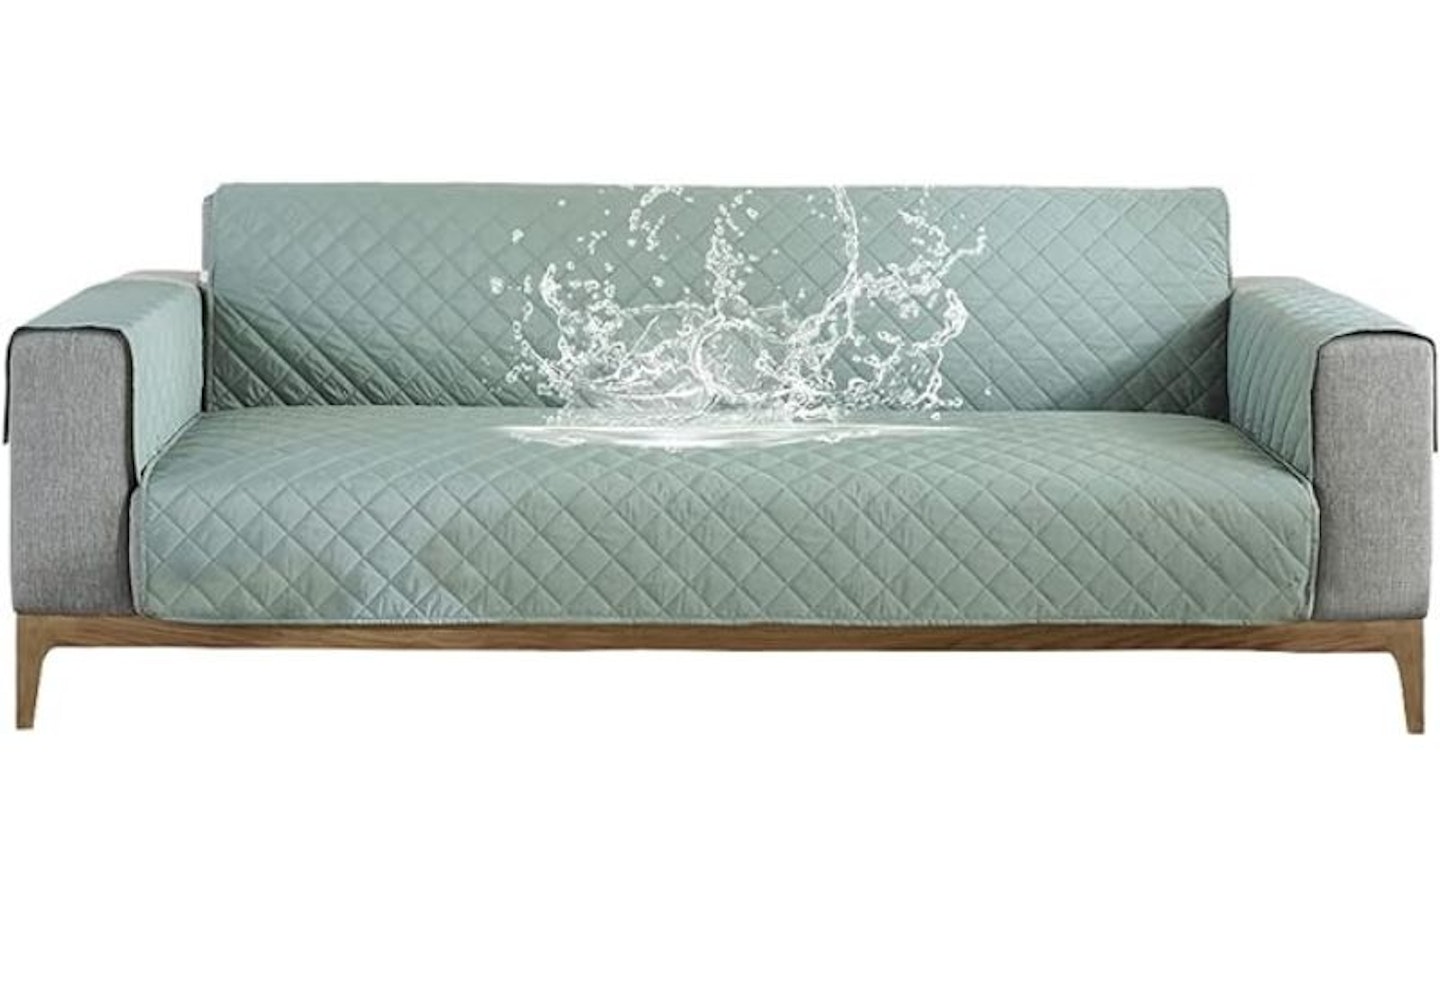 Carvapet - Best sofa covers